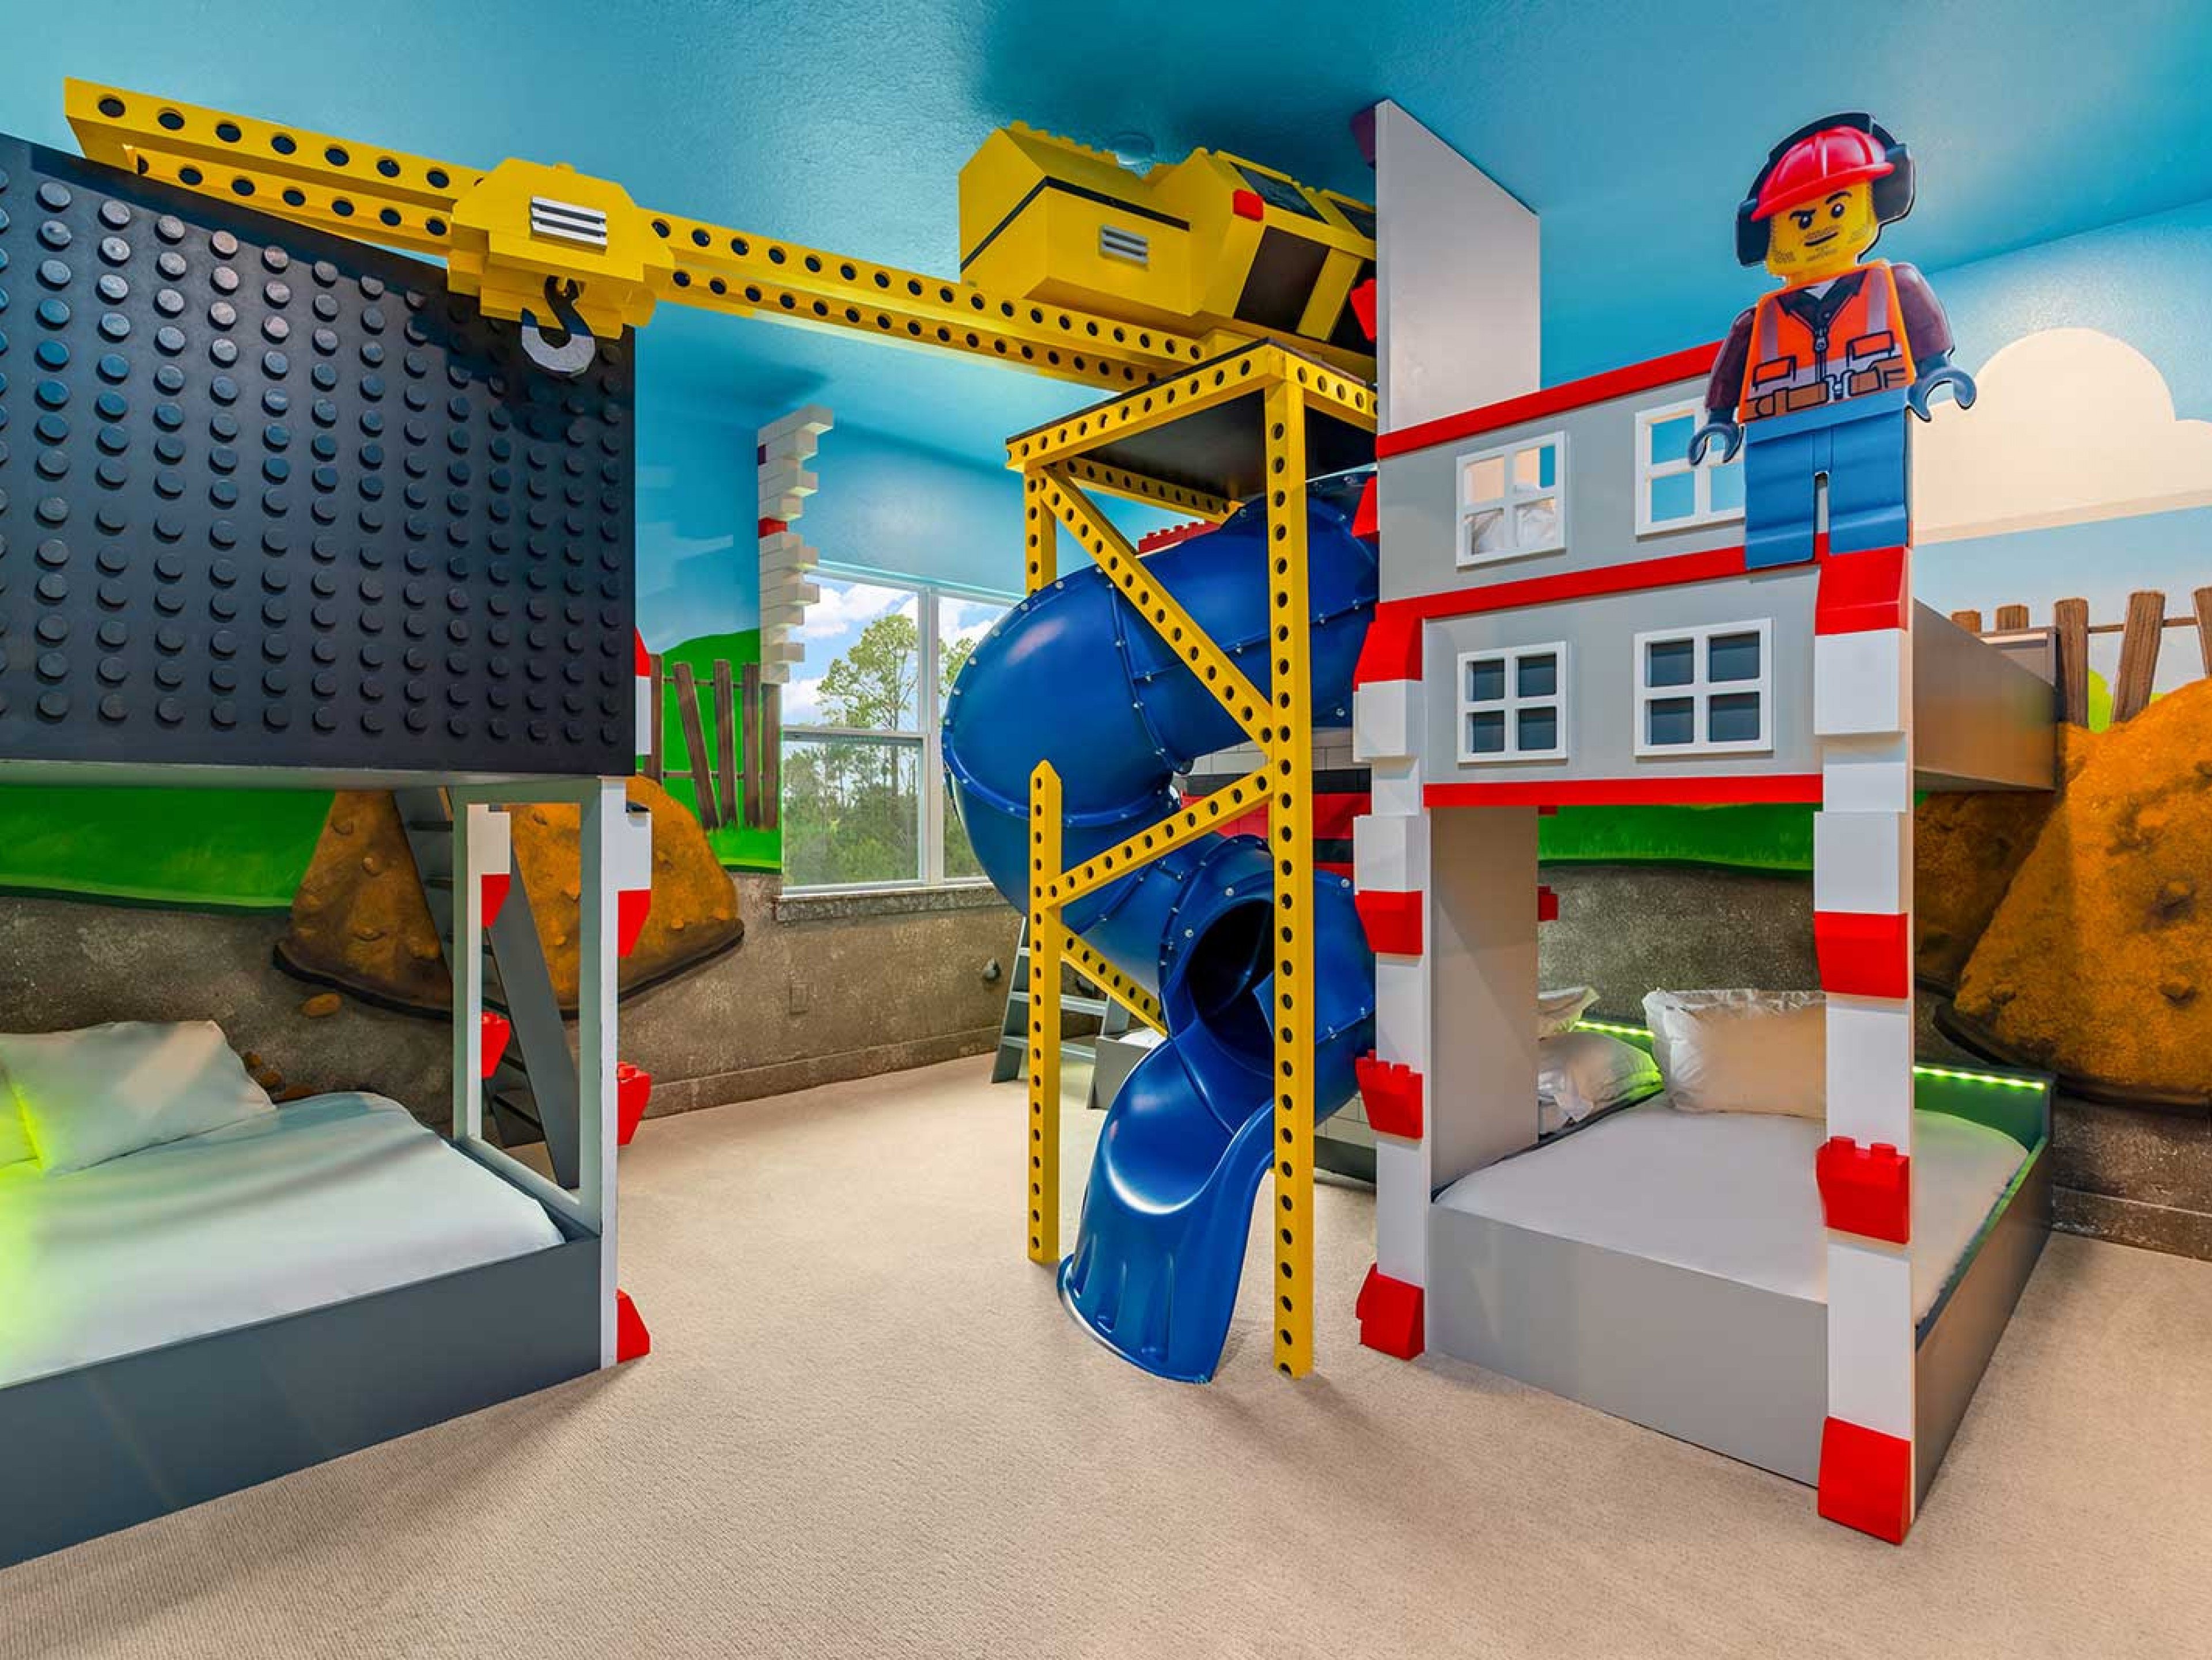  Orlando homes with Legoland-themed rooms - Villatel Village 56